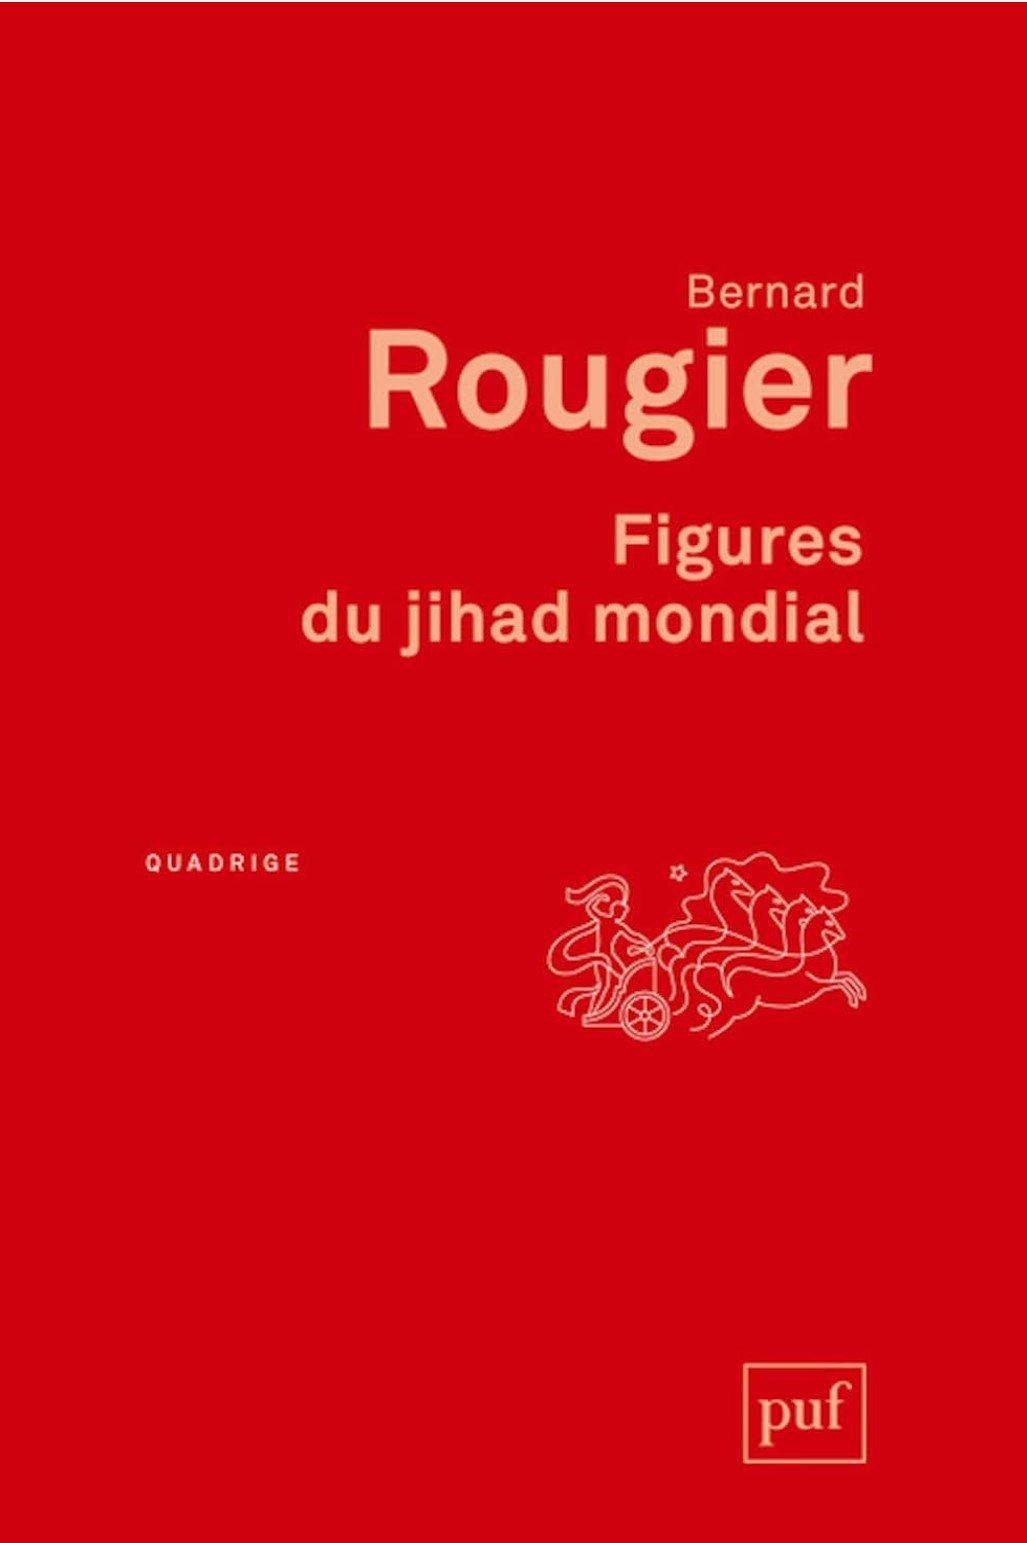 Bernard Rougier, Figures du jihad mondial